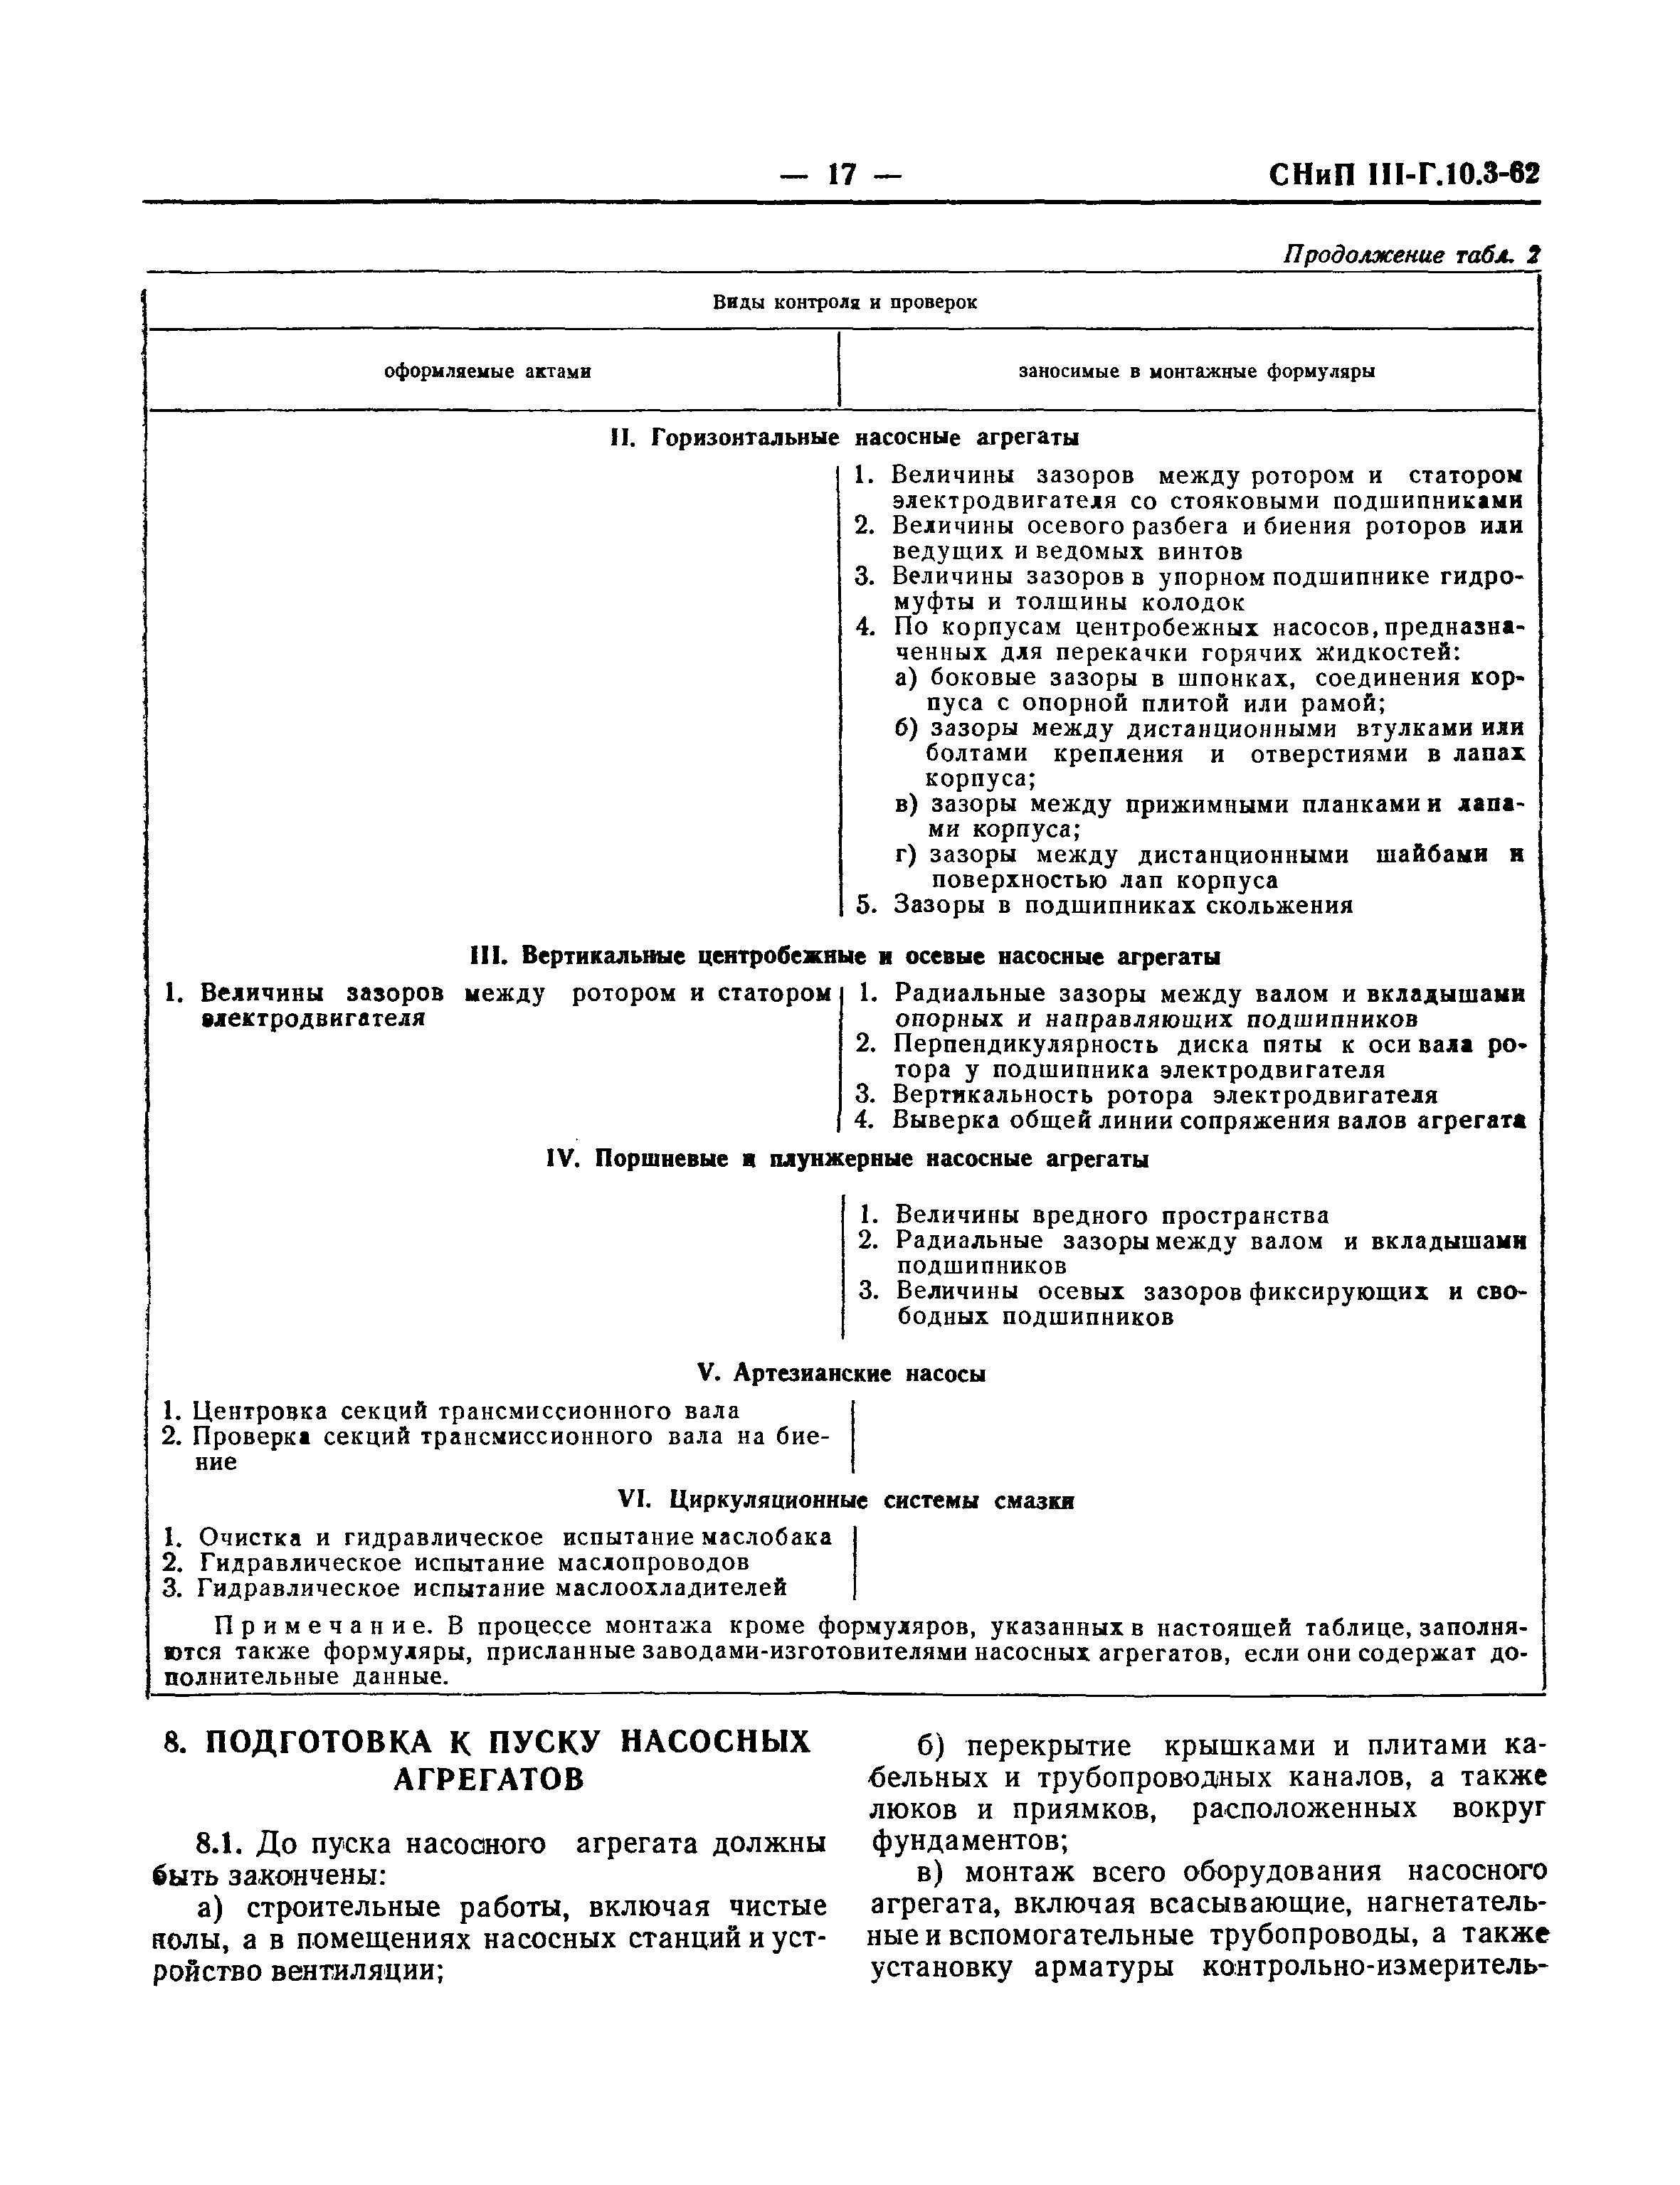 СНиП III-Г.10.3-62